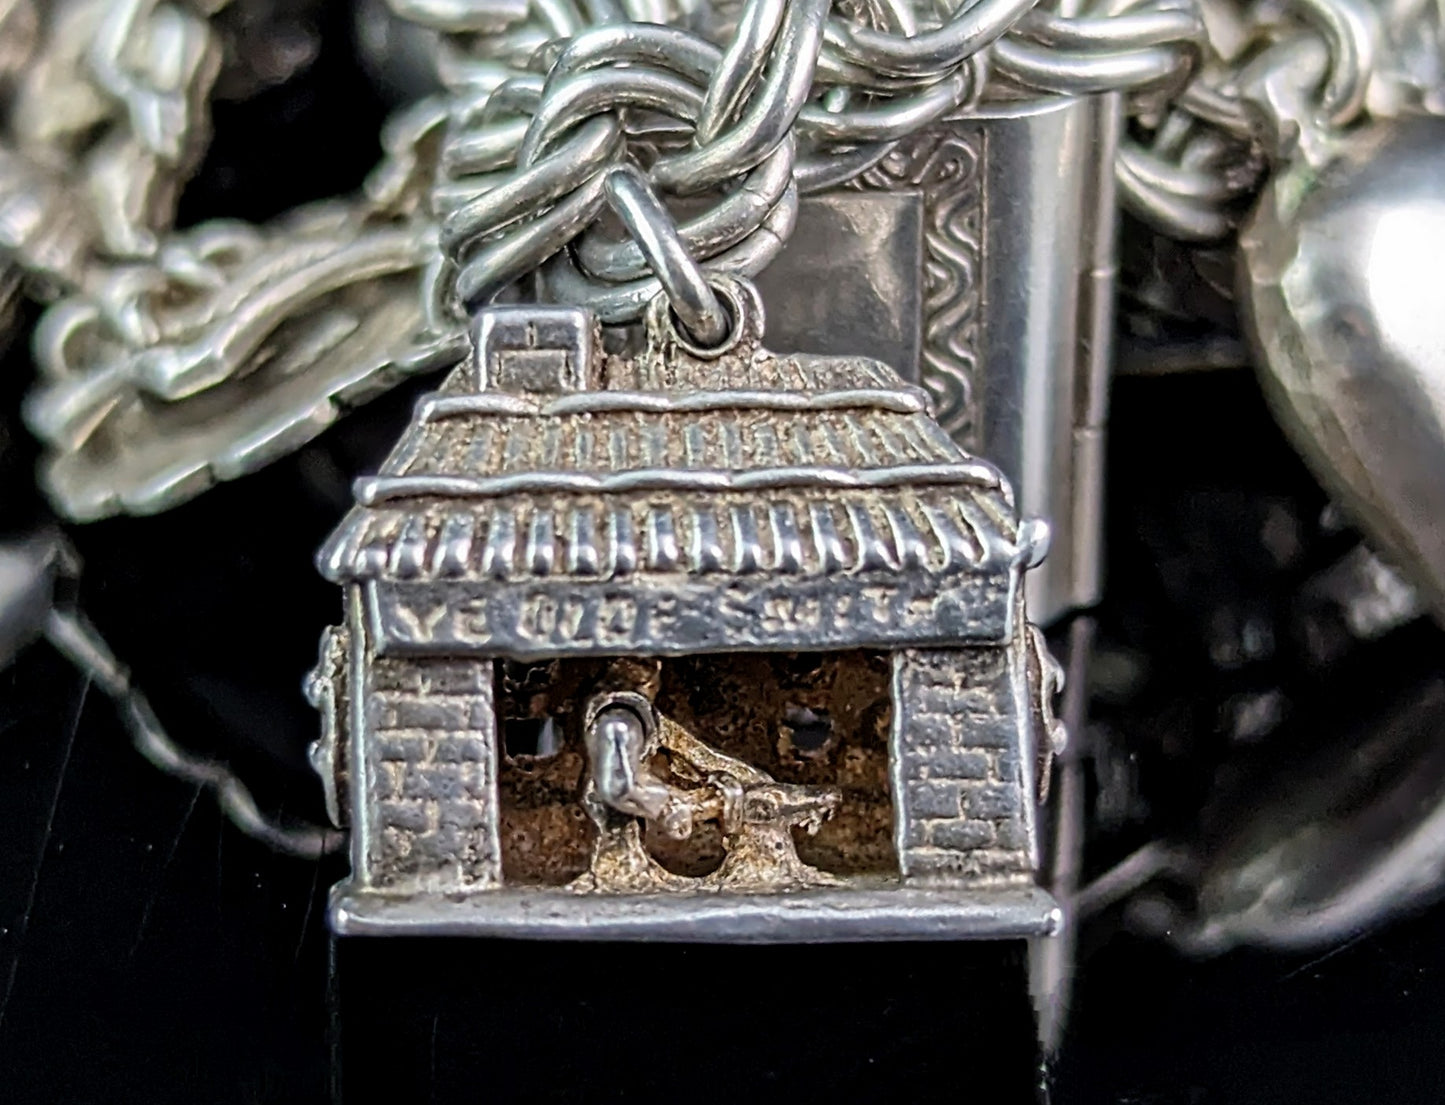 Vintage sterling silver loaded charm bracelet, heavy